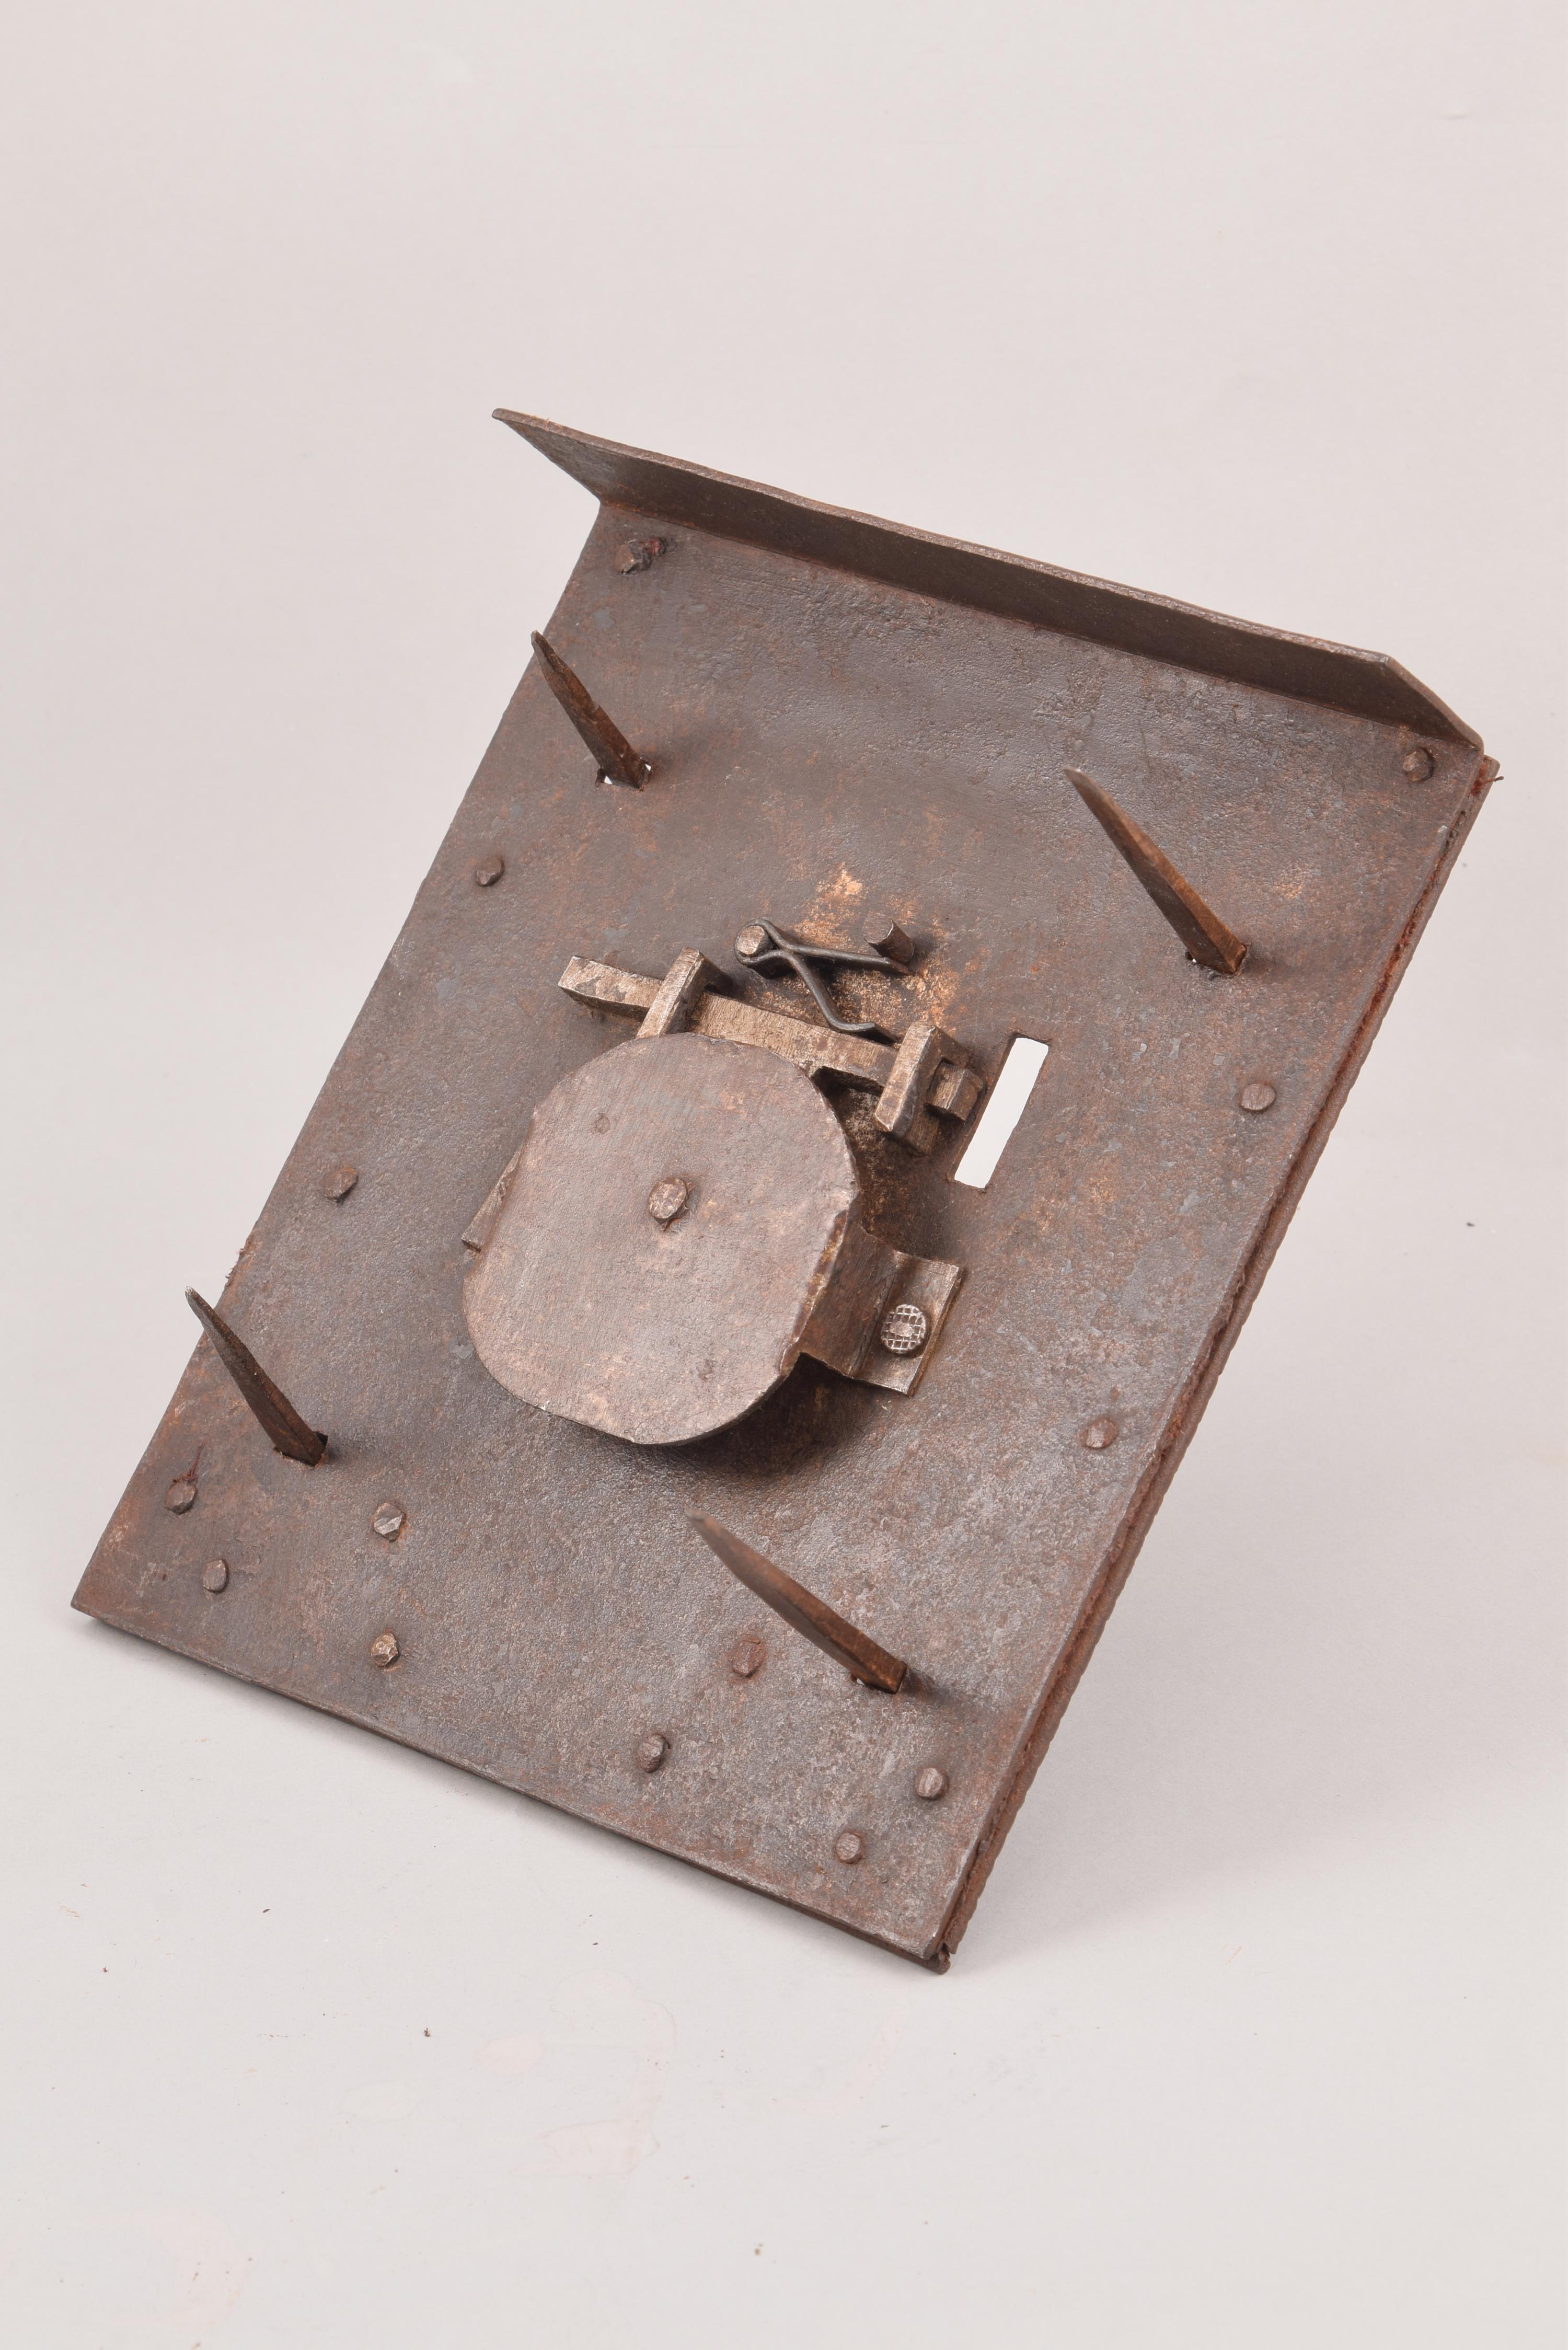 Spanish Lock with Key, Wrought Iron 16th-17th Centuries